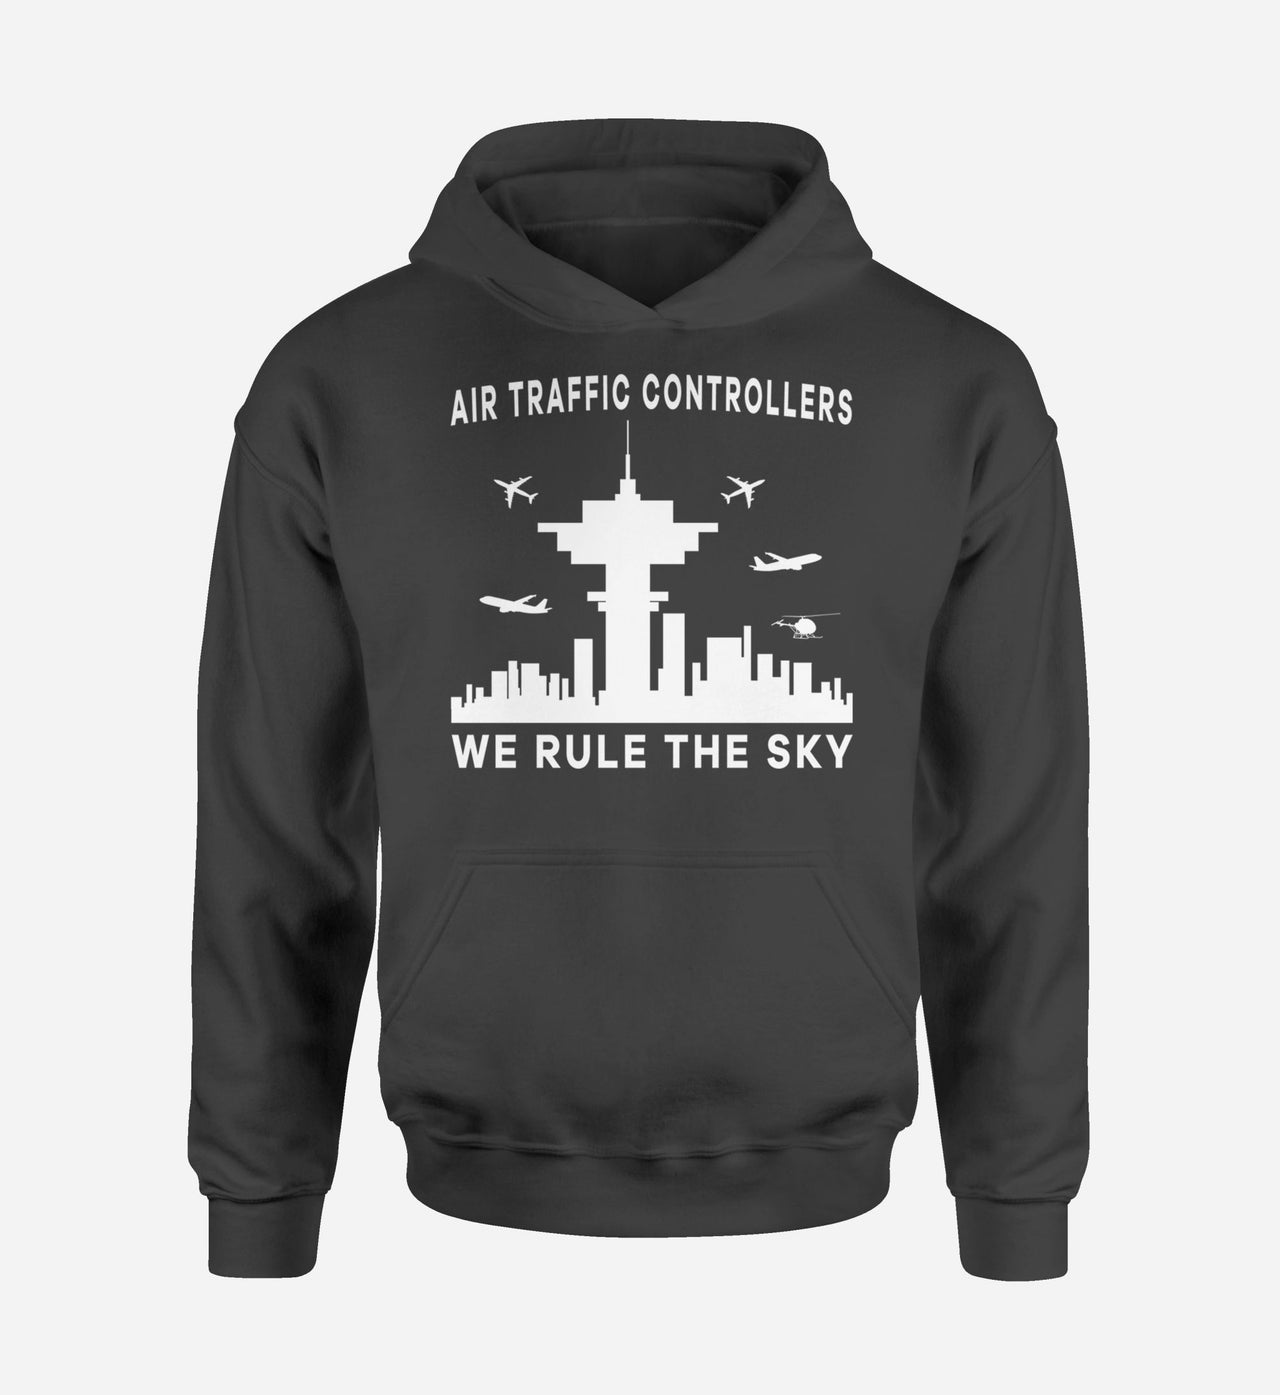 Air Traffic Controllers - We Rule The Sky Designed Hoodies